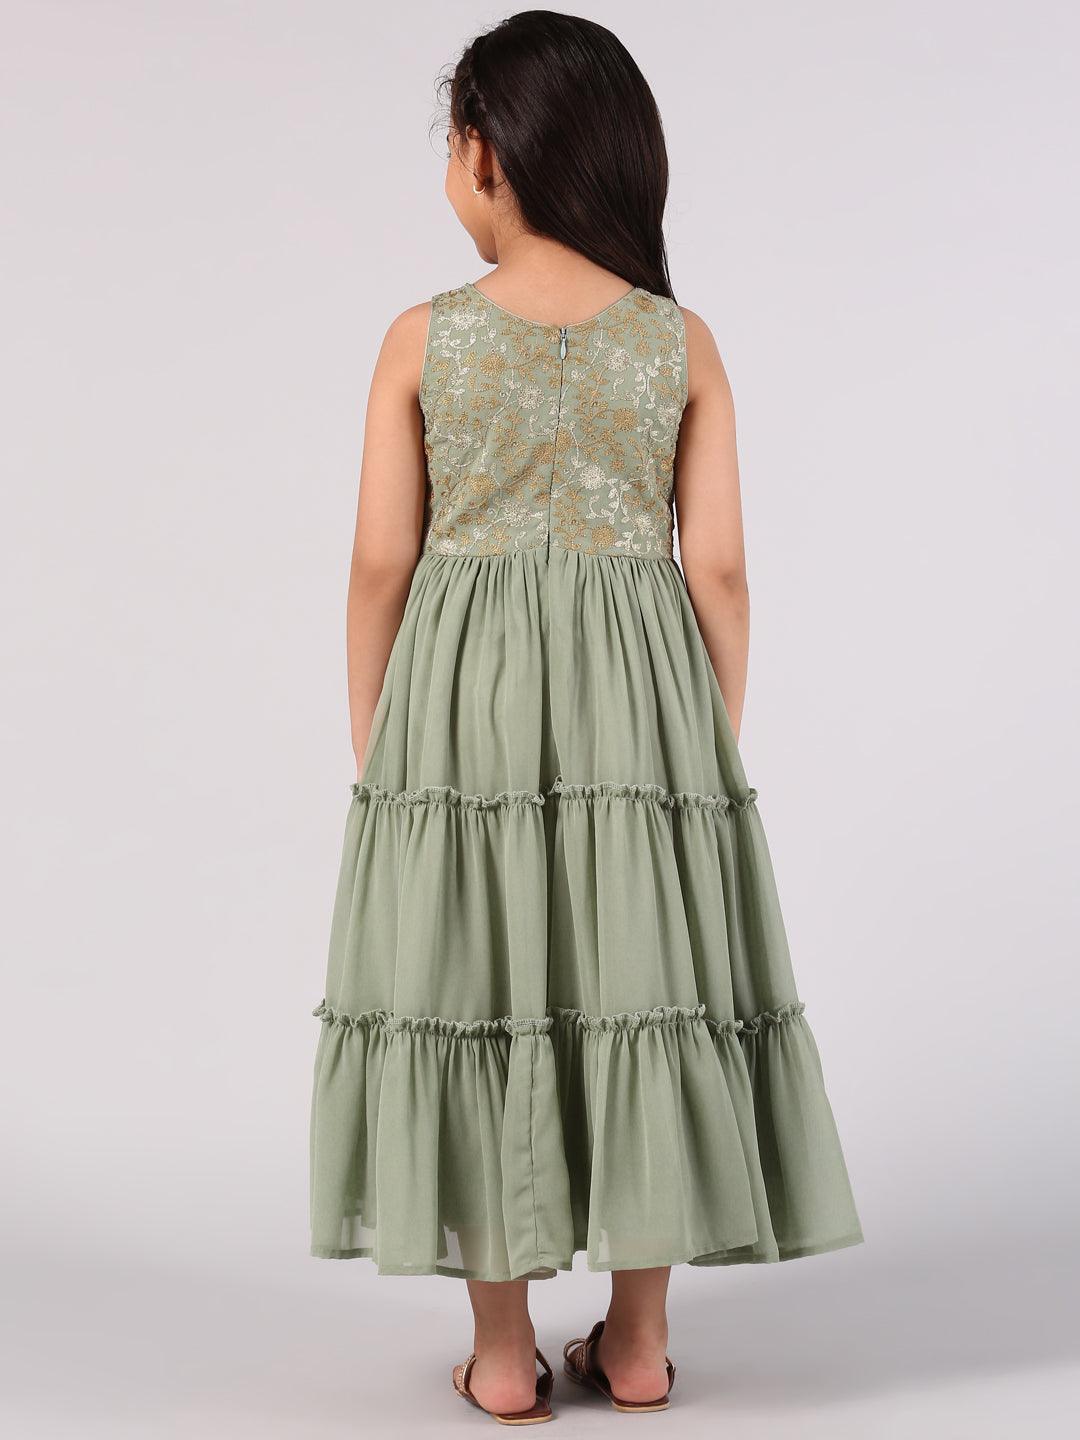 Green Embroidered Georgette Dress - ShopLibas